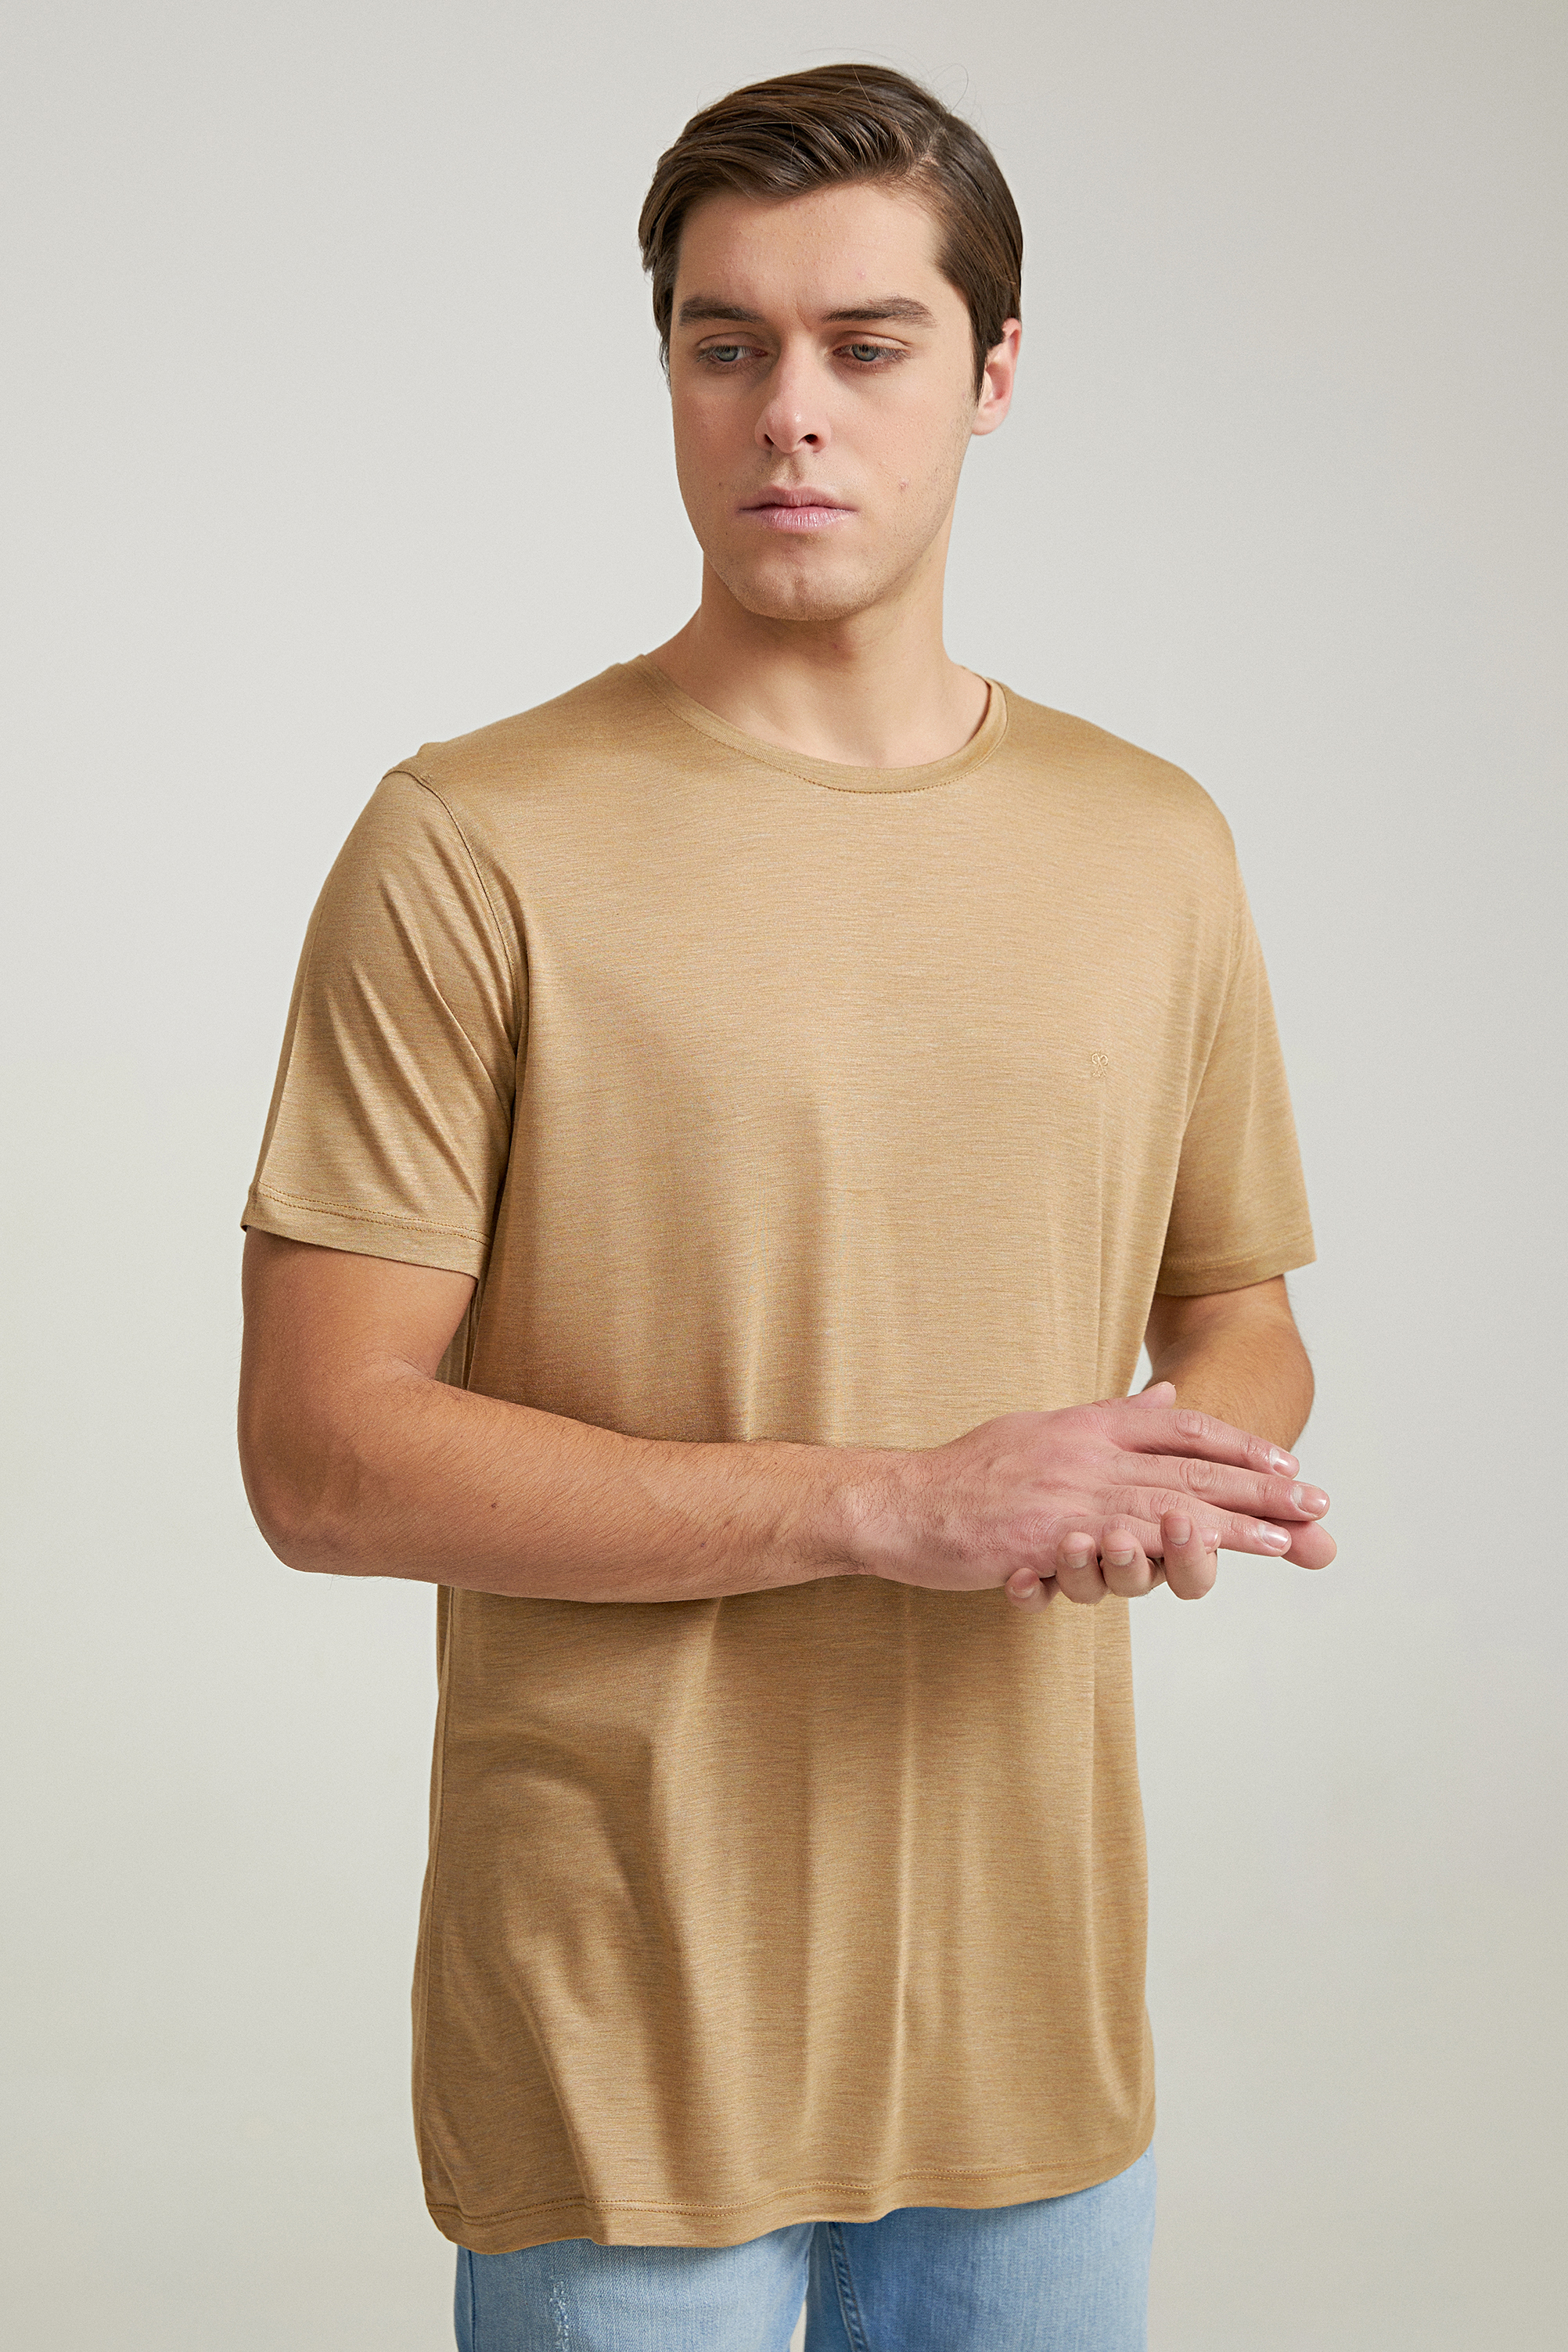 Damat Tween Damat Camel T-Shirt. 1